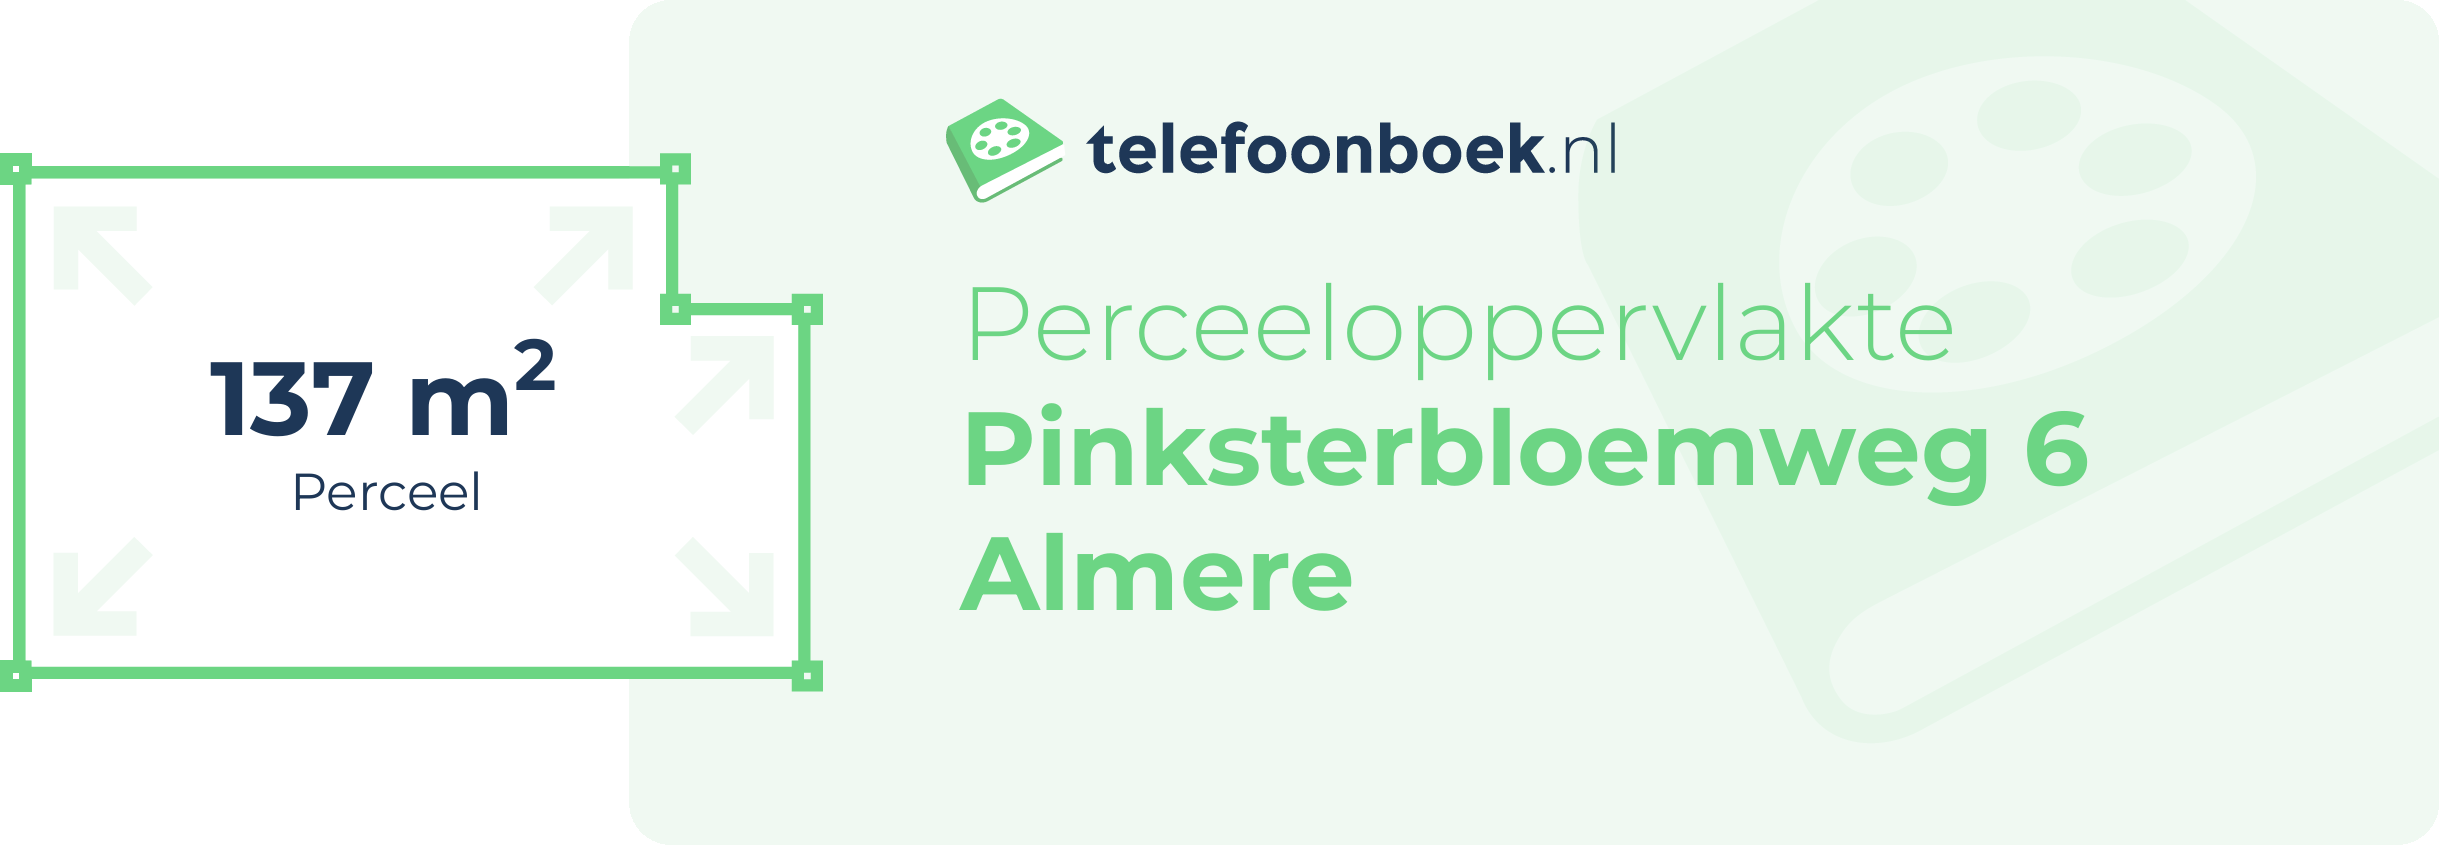 Perceeloppervlakte Pinksterbloemweg 6 Almere